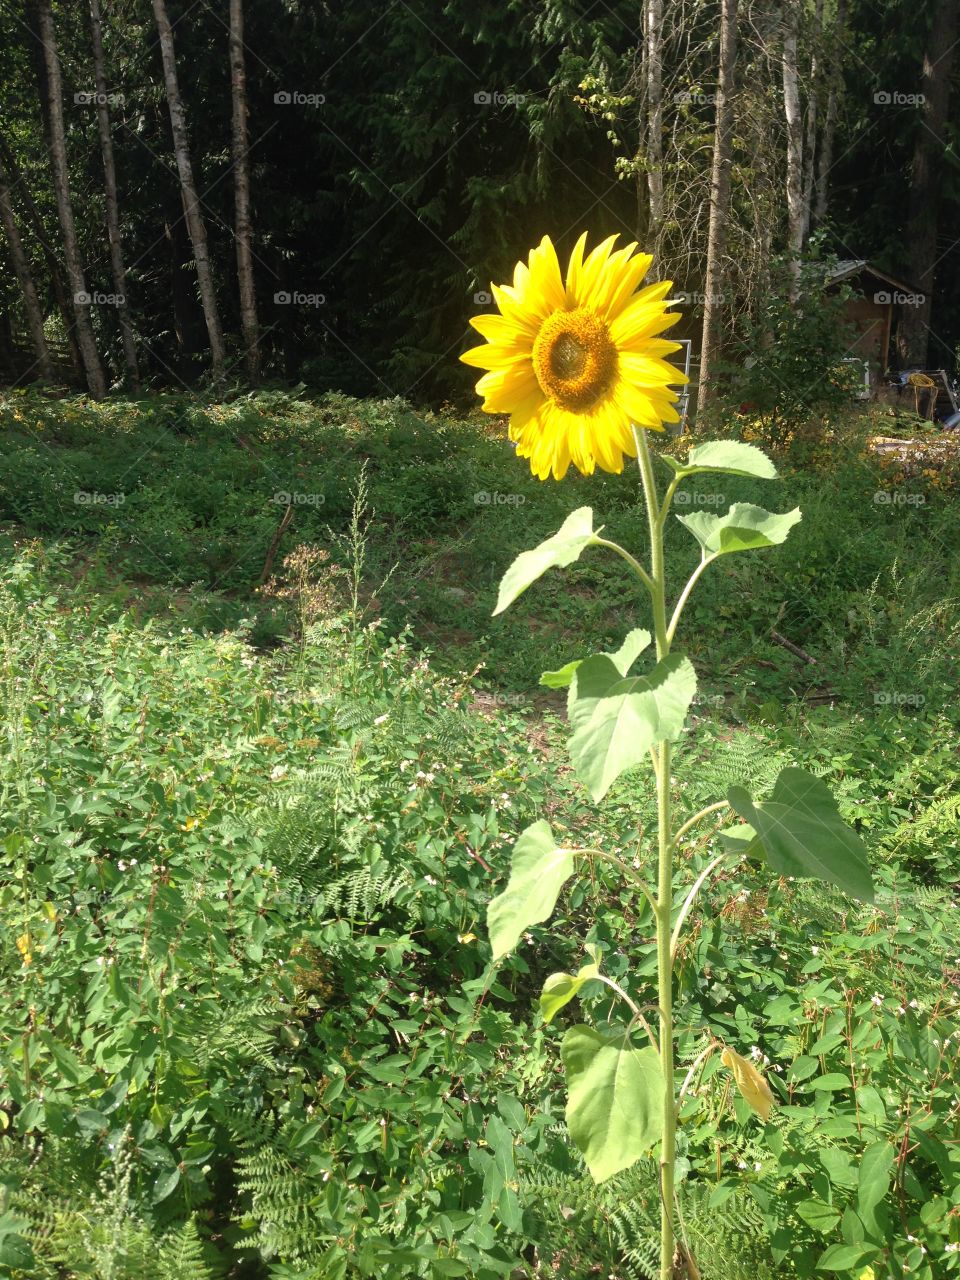 Random sunflower 